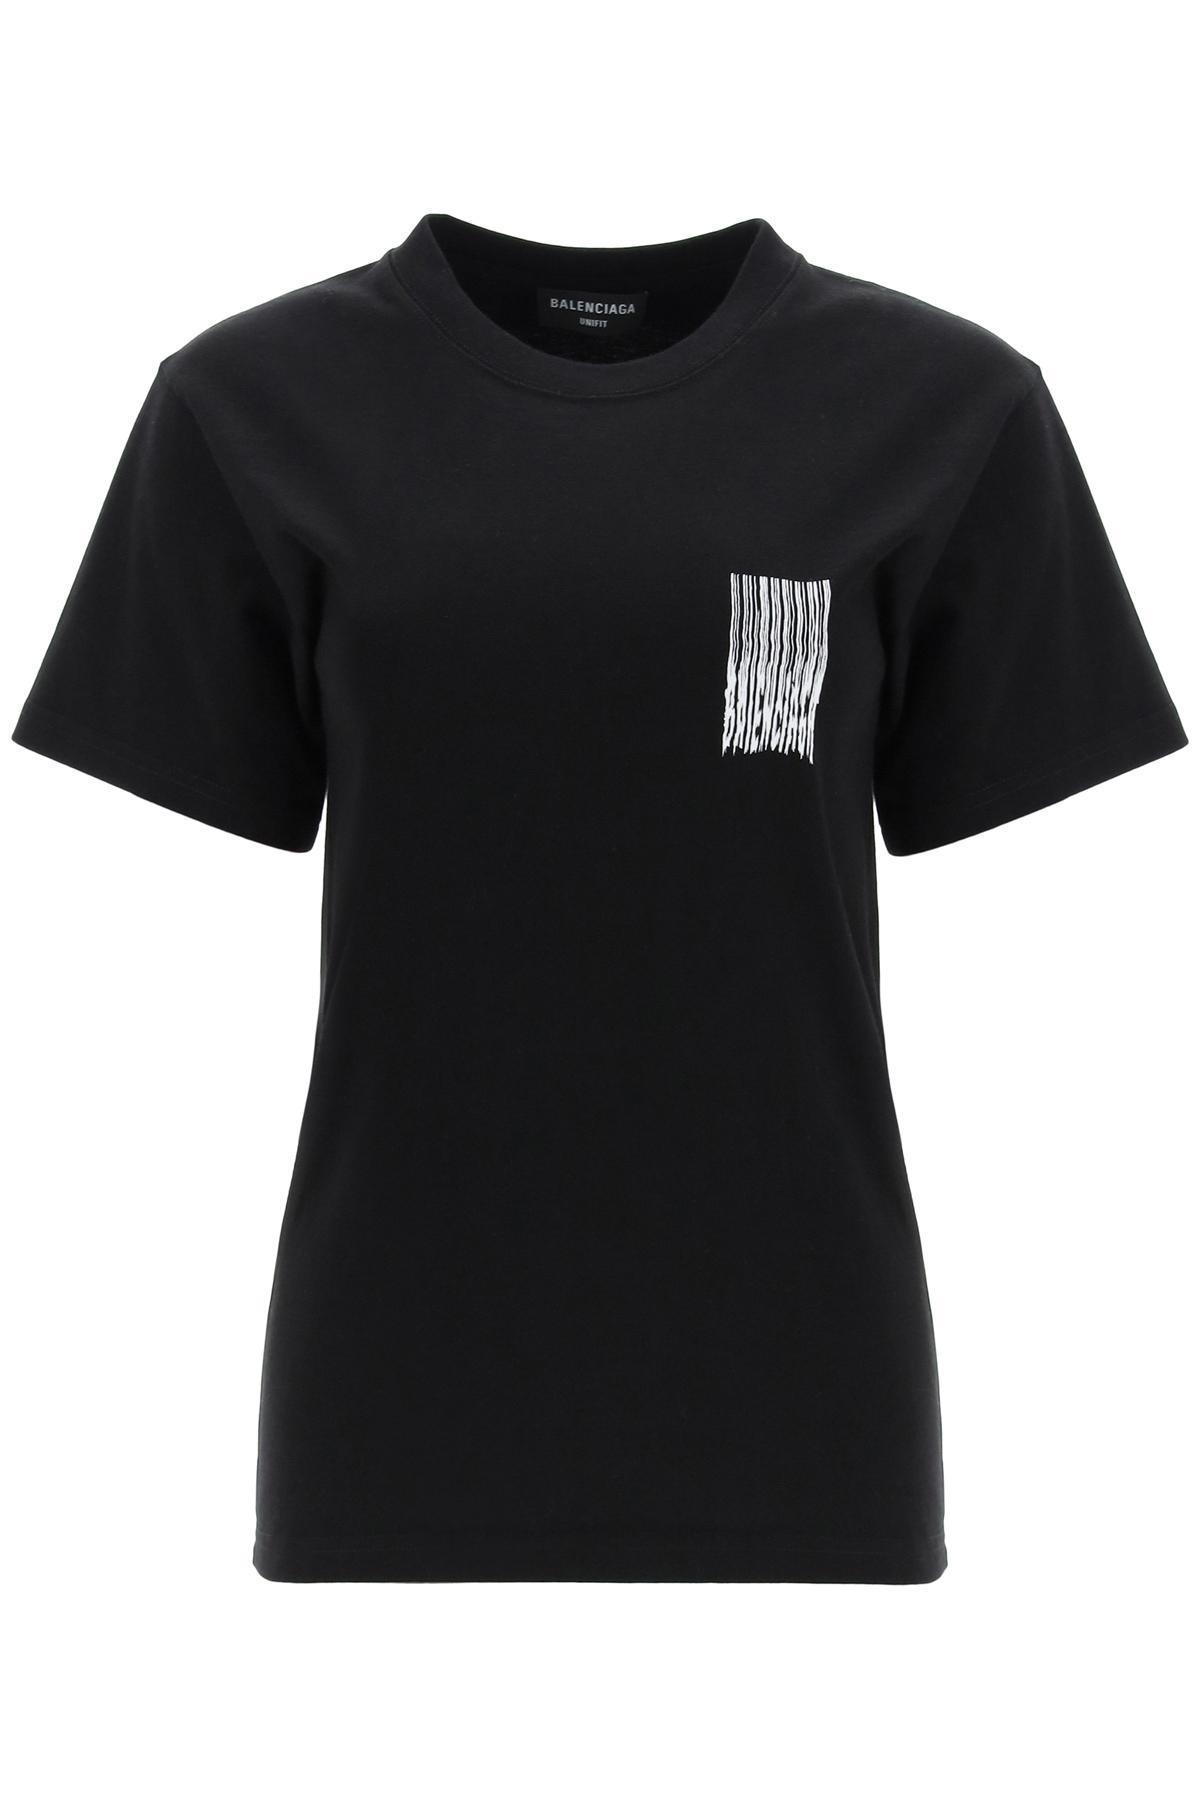 Balenciaga Cotton Unifit Barcode Logo T-shirt in Black White 